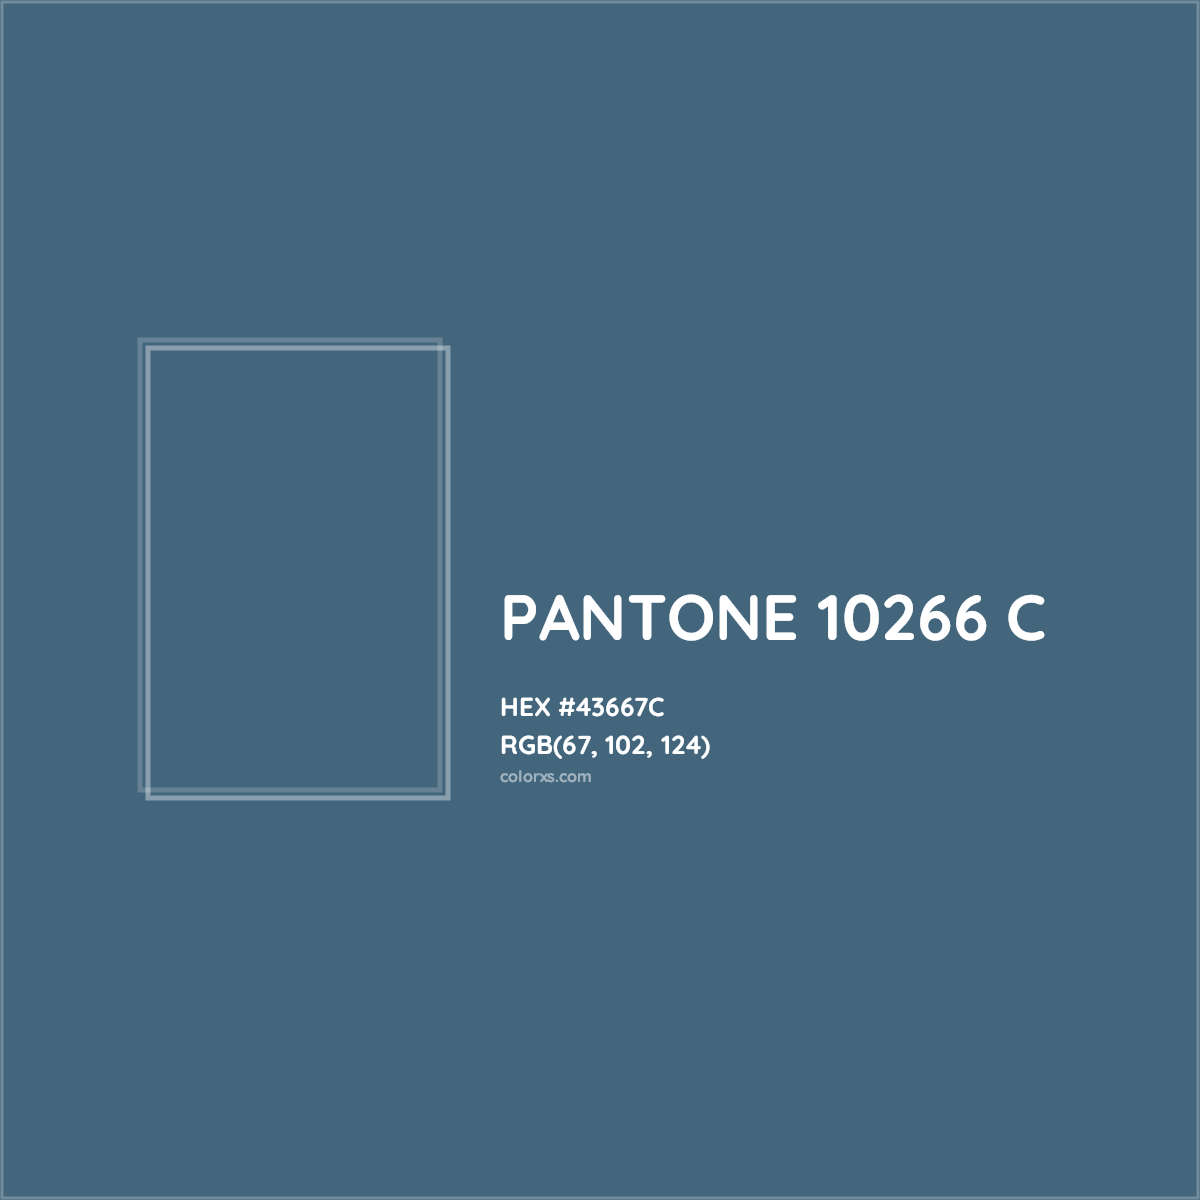 HEX #43667C PANTONE 10266 C CMS Pantone PMS - Color Code